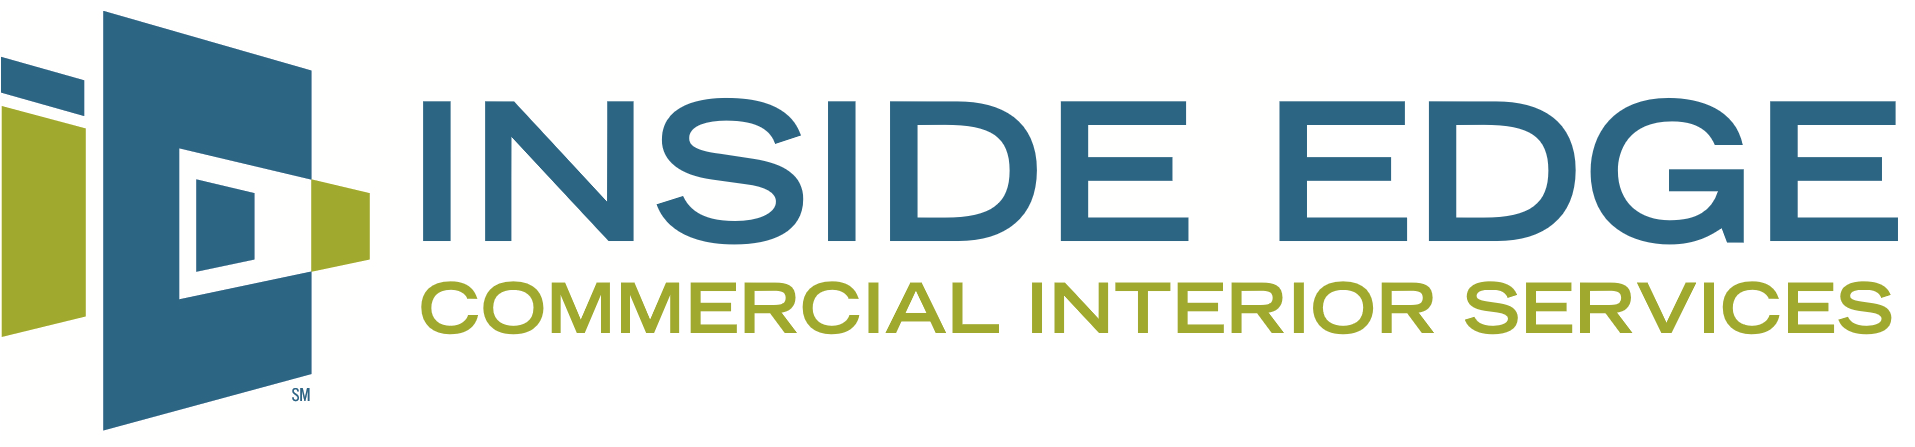 Inside Edge CISIEX-Blog-hero3 - Inside Edge CIS